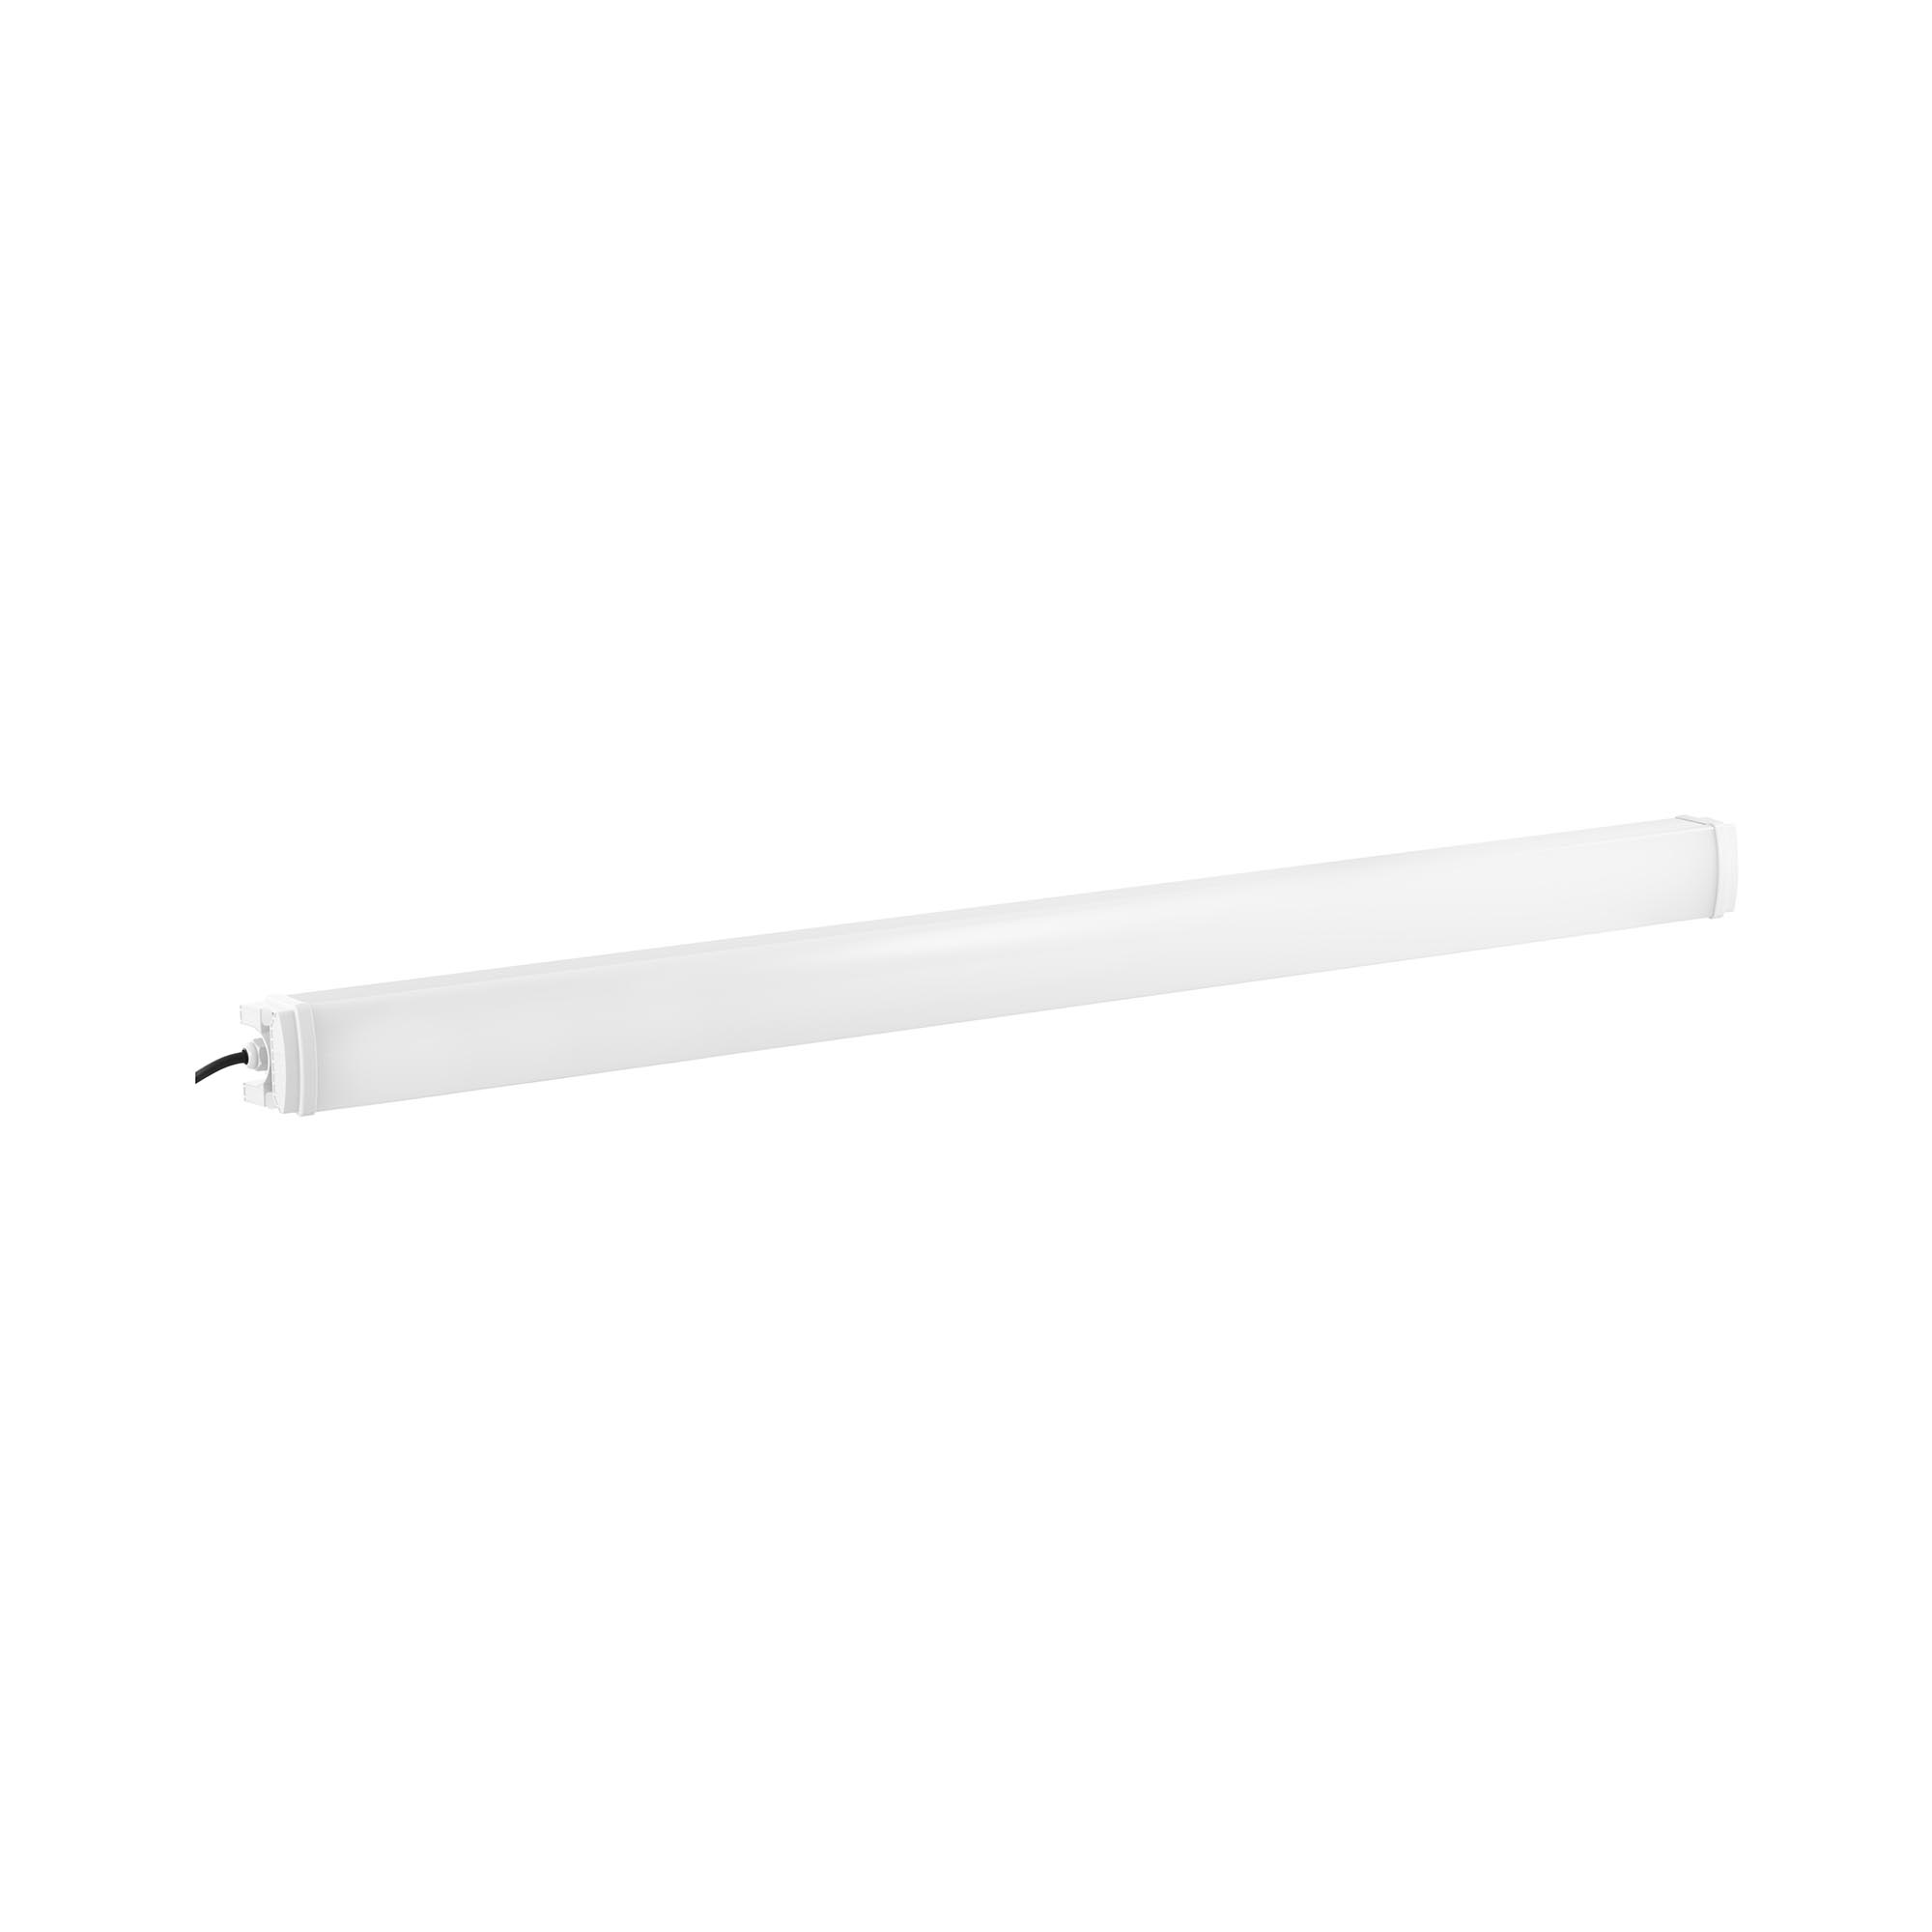 LED impermeabile - 60 W - 150 cm